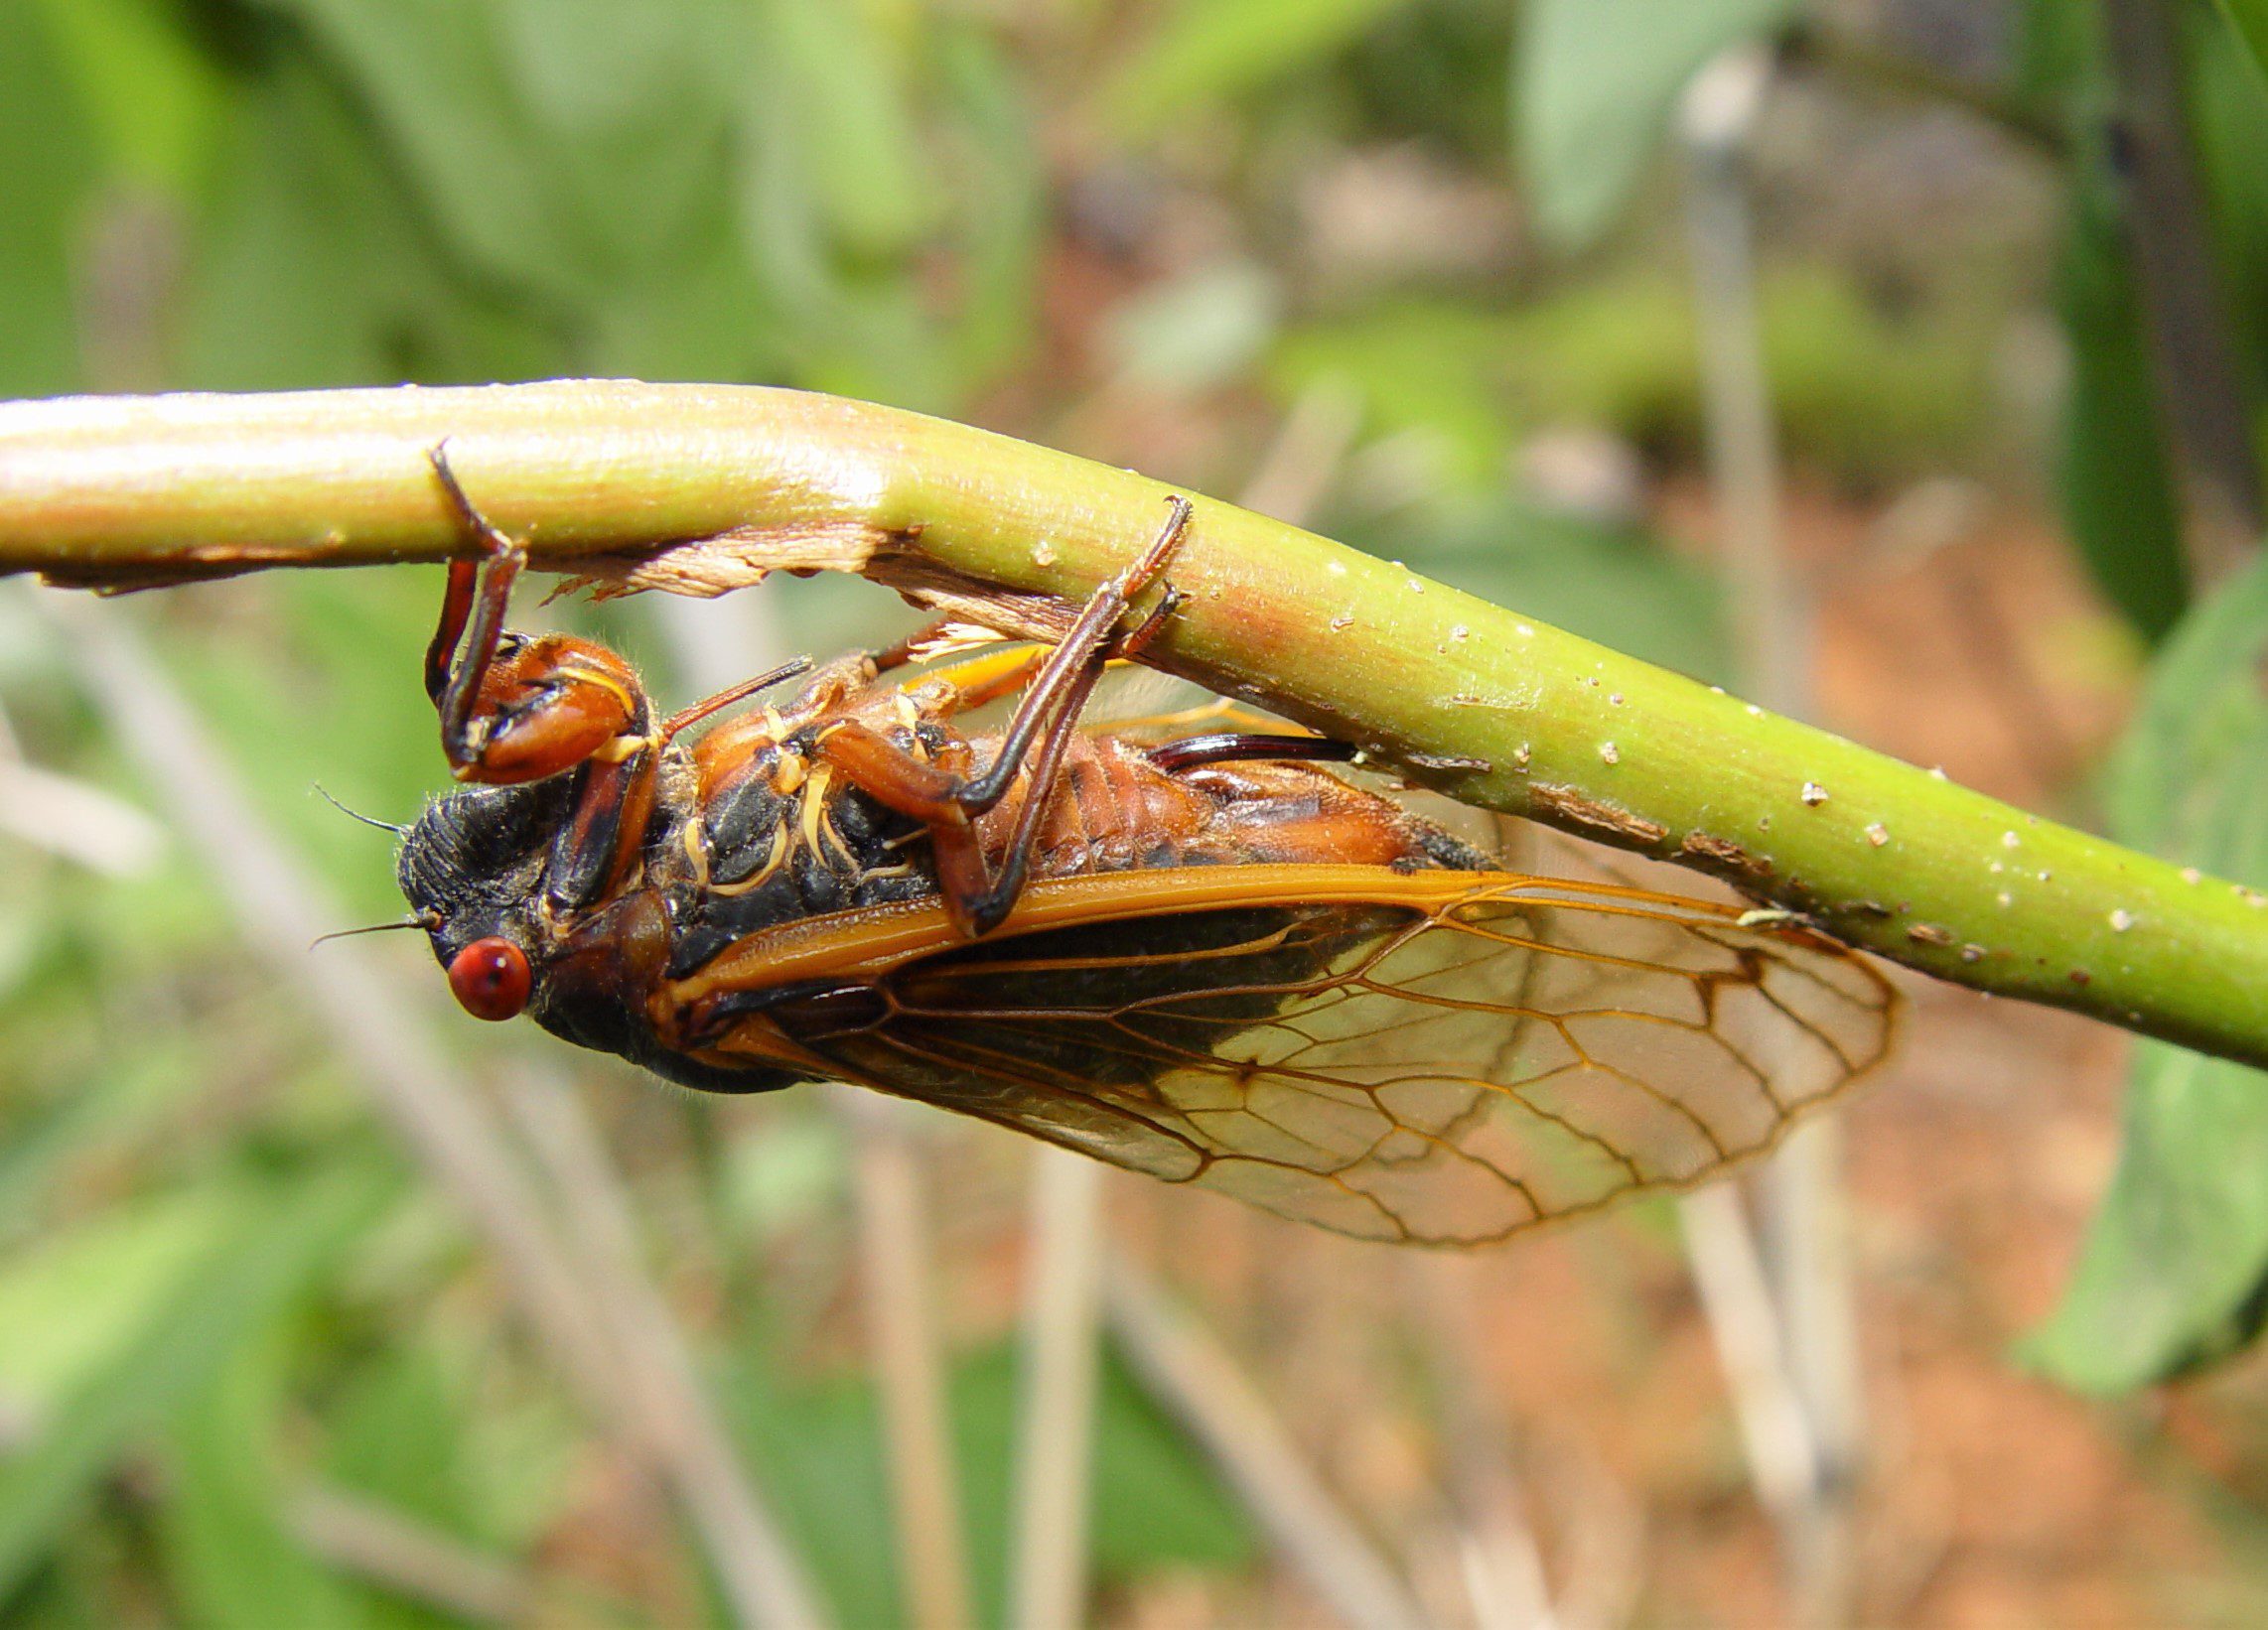 Female Cicada depositing eggs in tree branch